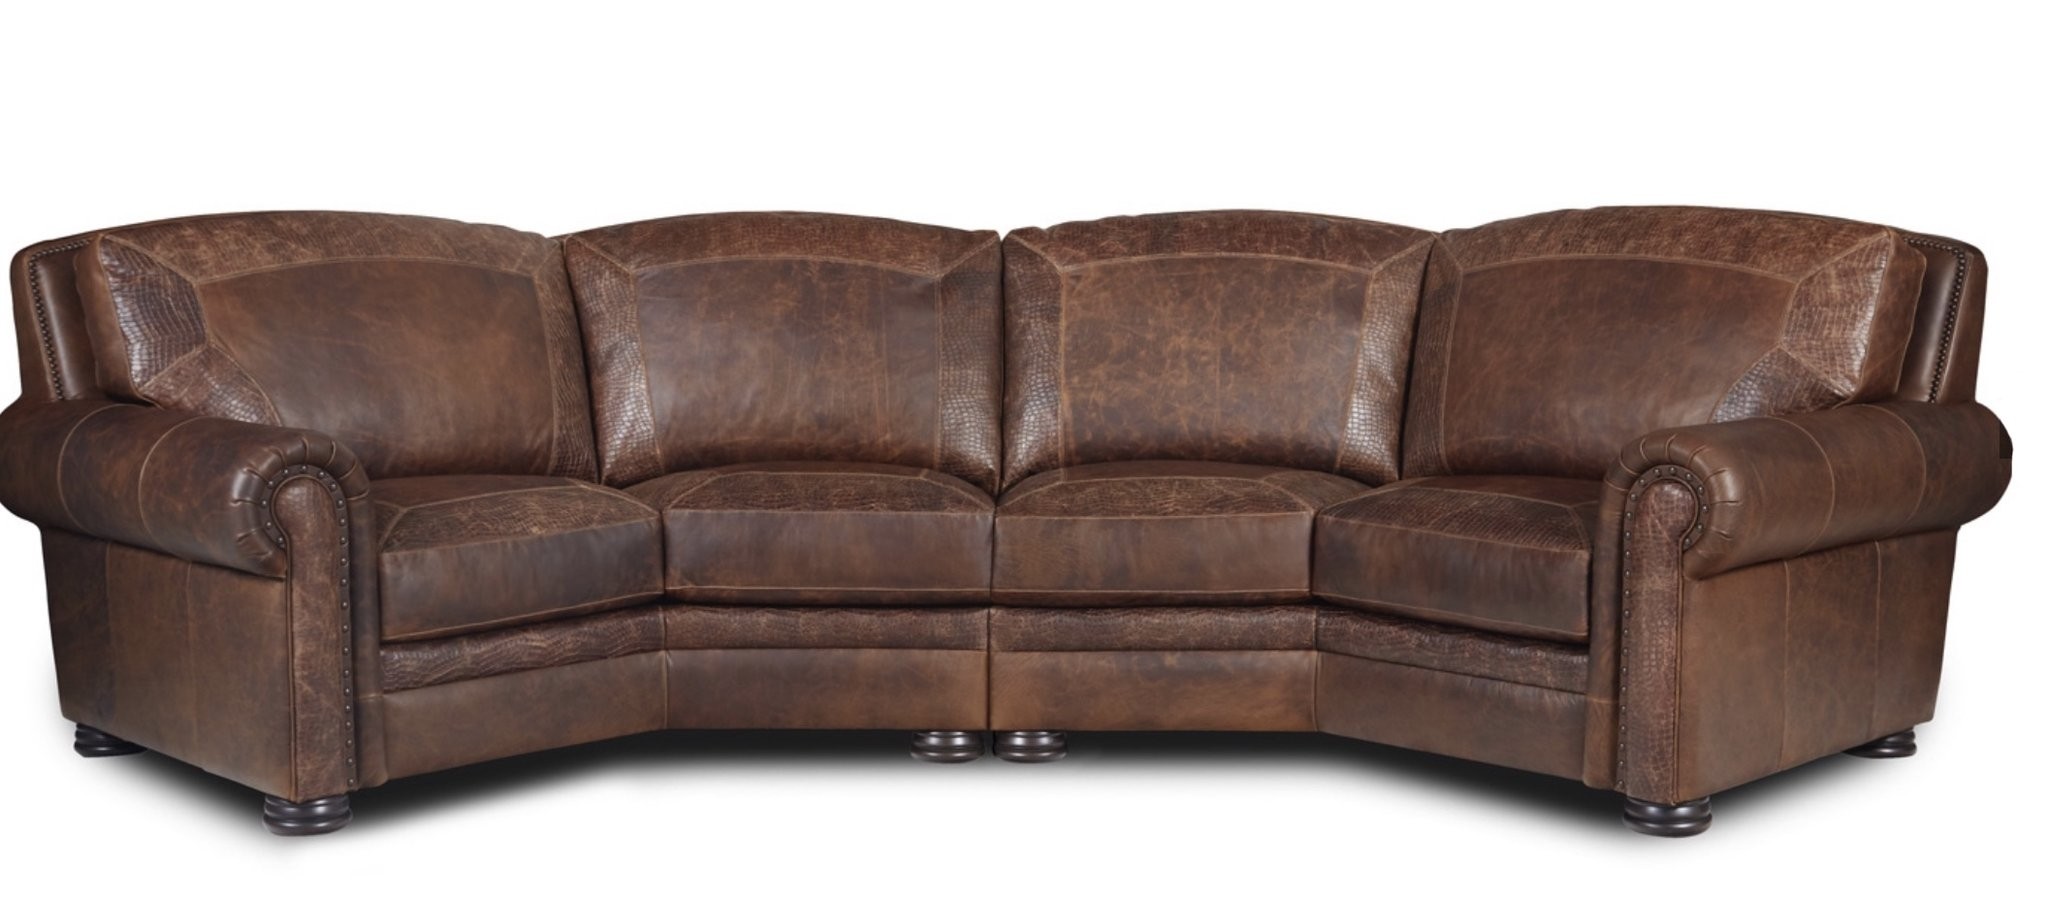 Denver leather curved sofa hat creek interiors